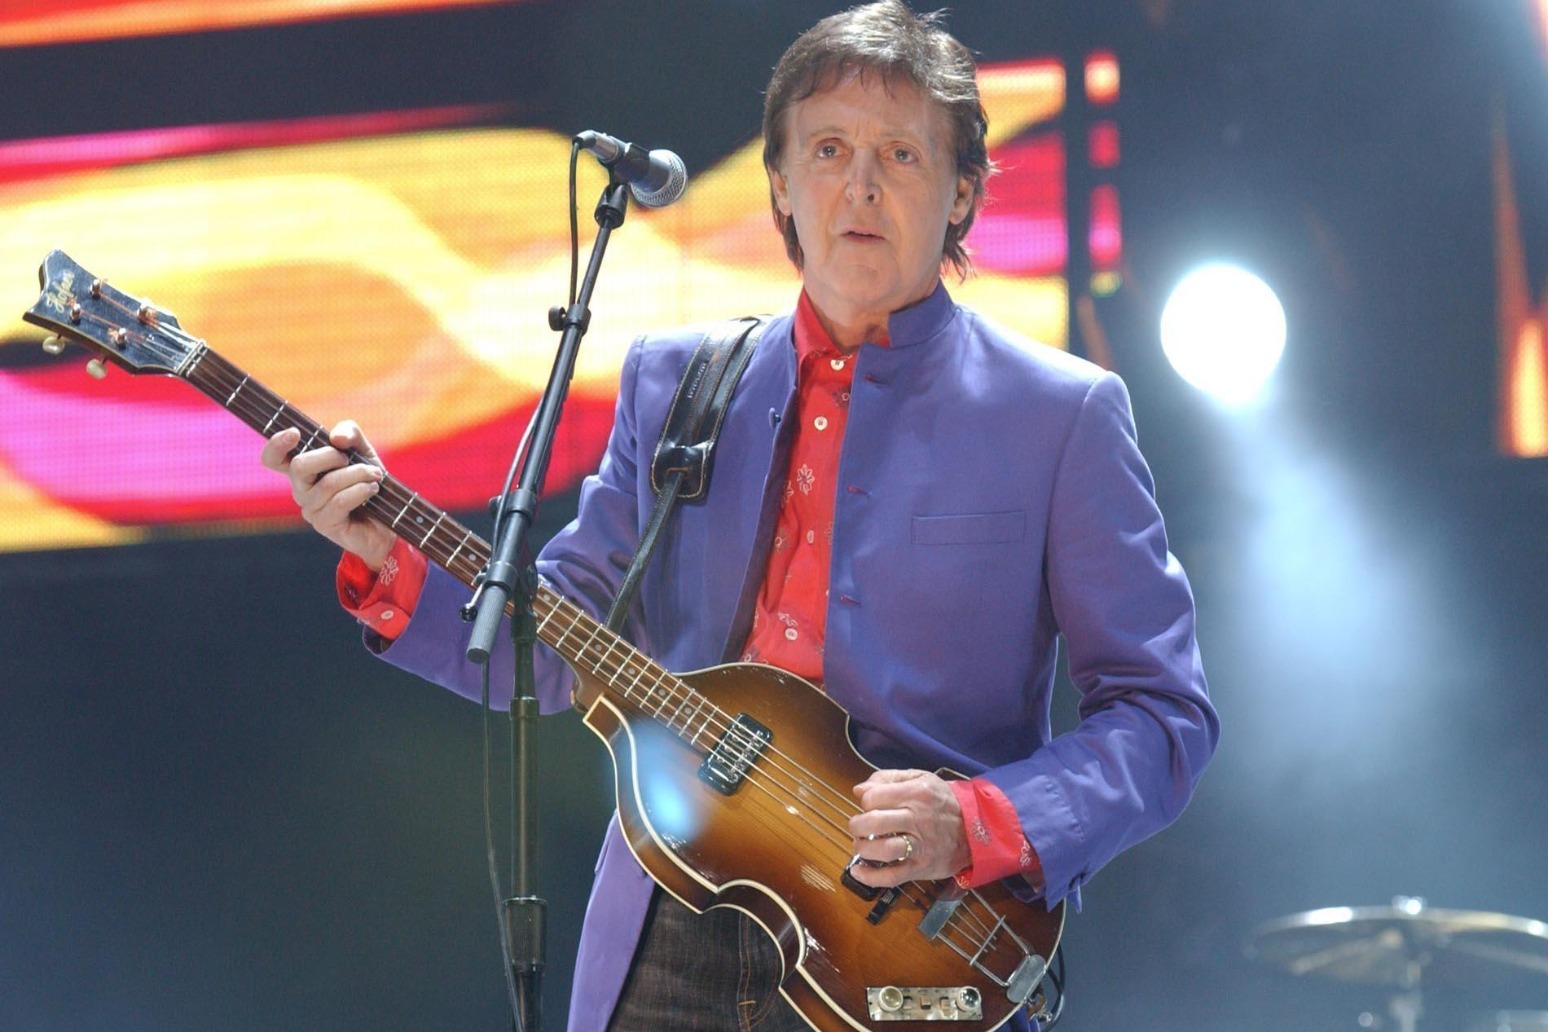 Sir Paul McCartney set to make history as oldest solo headliner at Glastonbury 